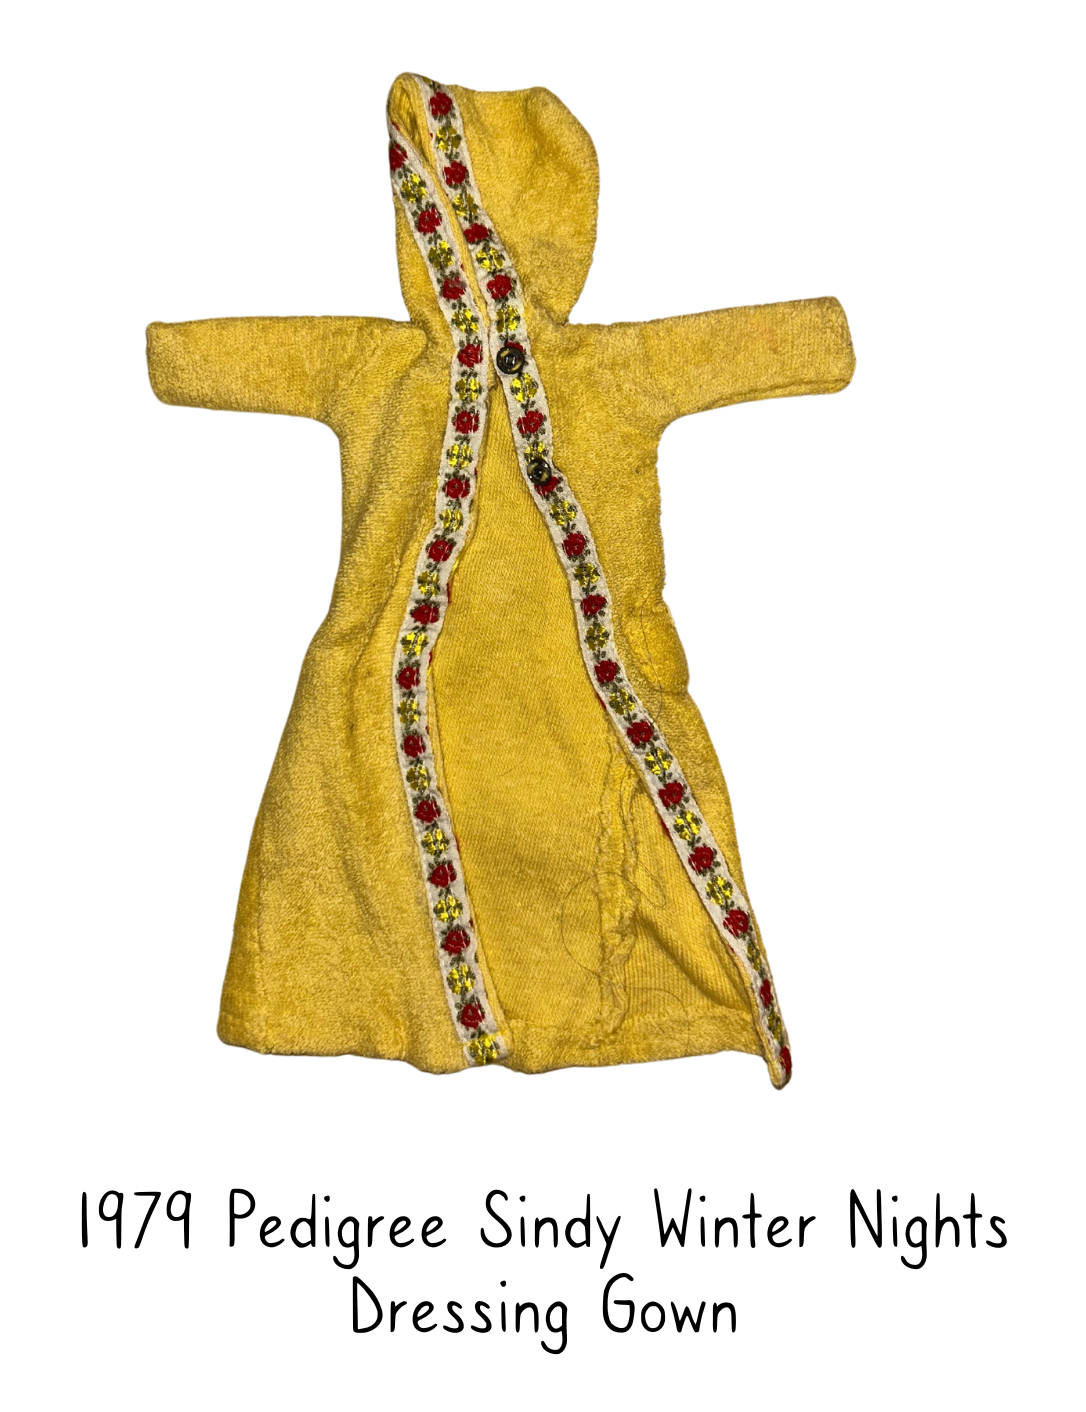 1979 Pedigree Sindy Winter Nights Dressing Gown